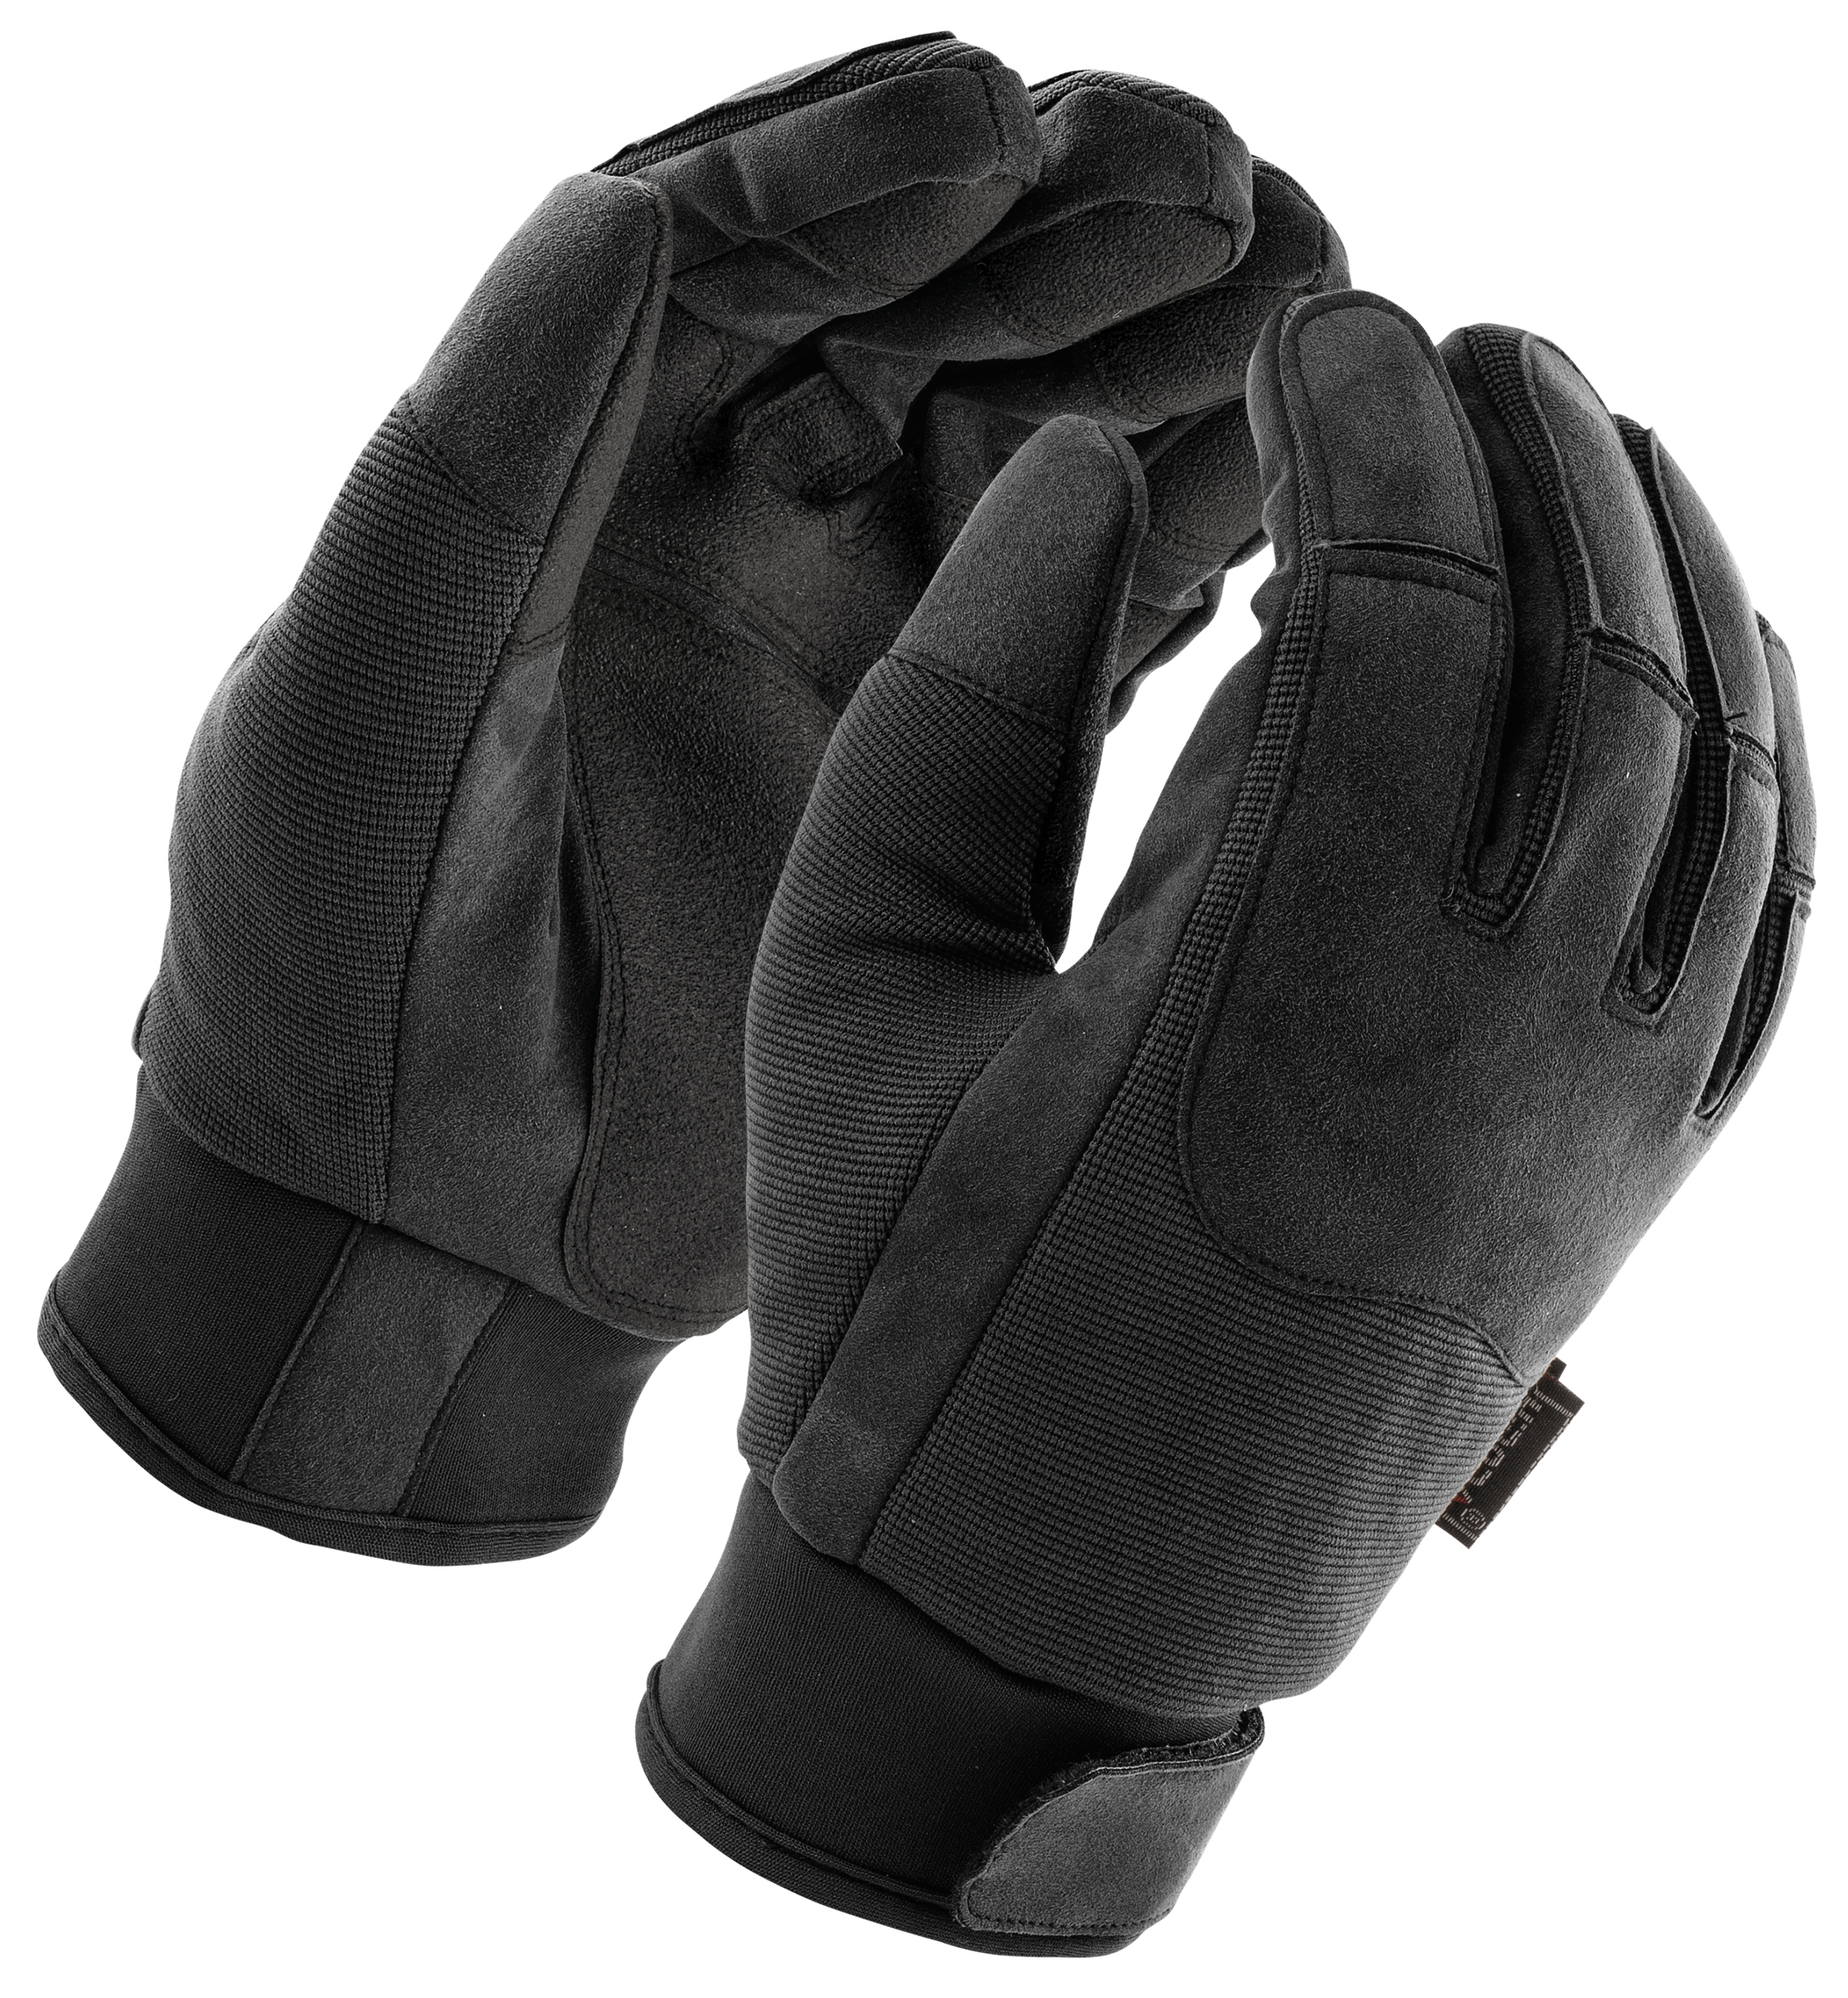 Winterhandschuhe | Deutschland Company Recon Gloves Army Winter Mil-Tec